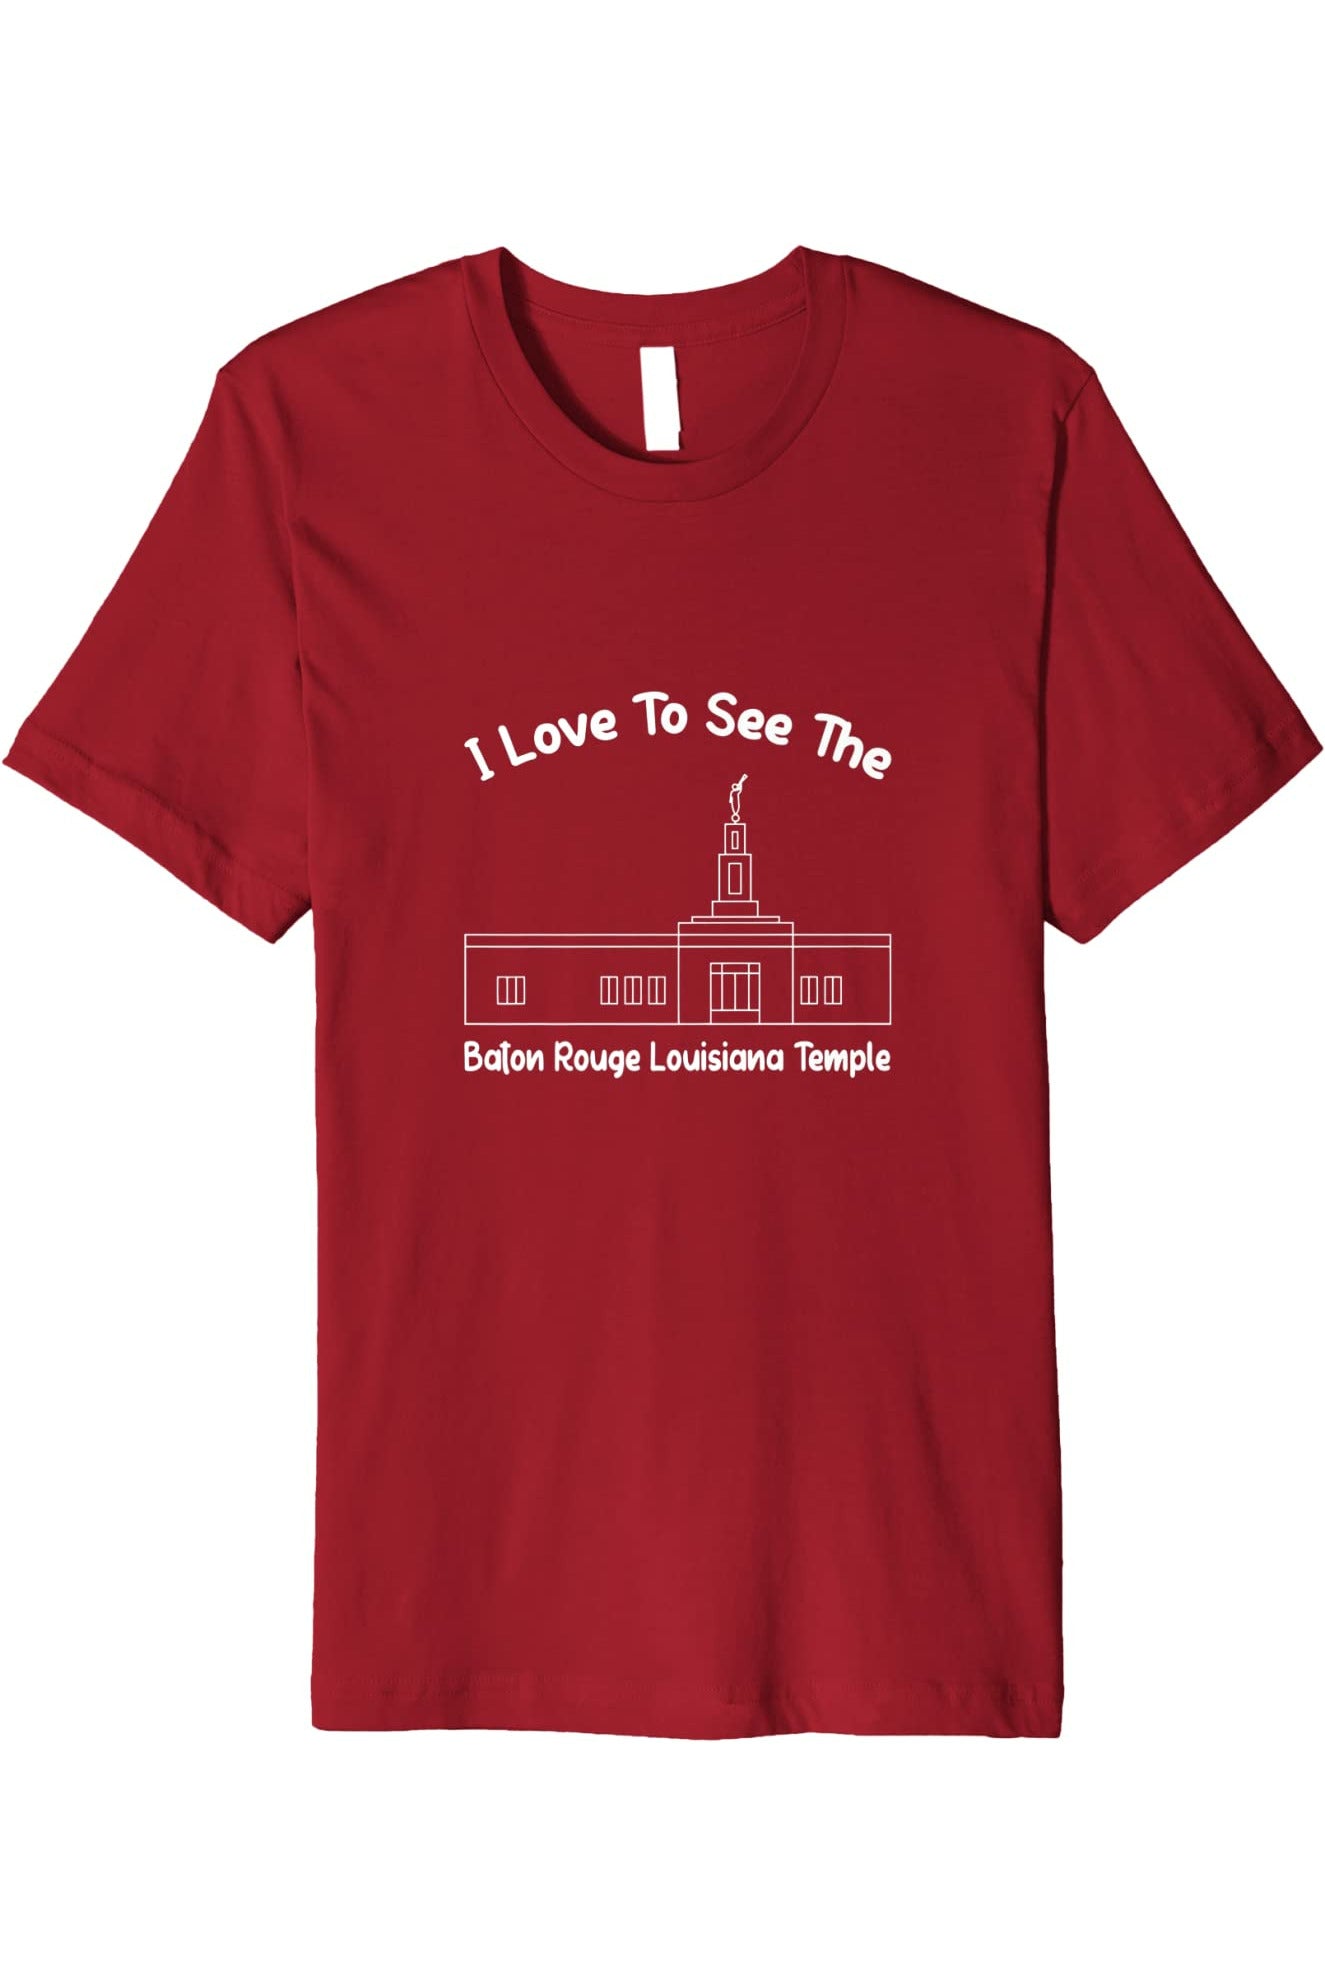 Baton Rouge Louisiana Temple T-Shirt - Premium - Primary Style (English) US